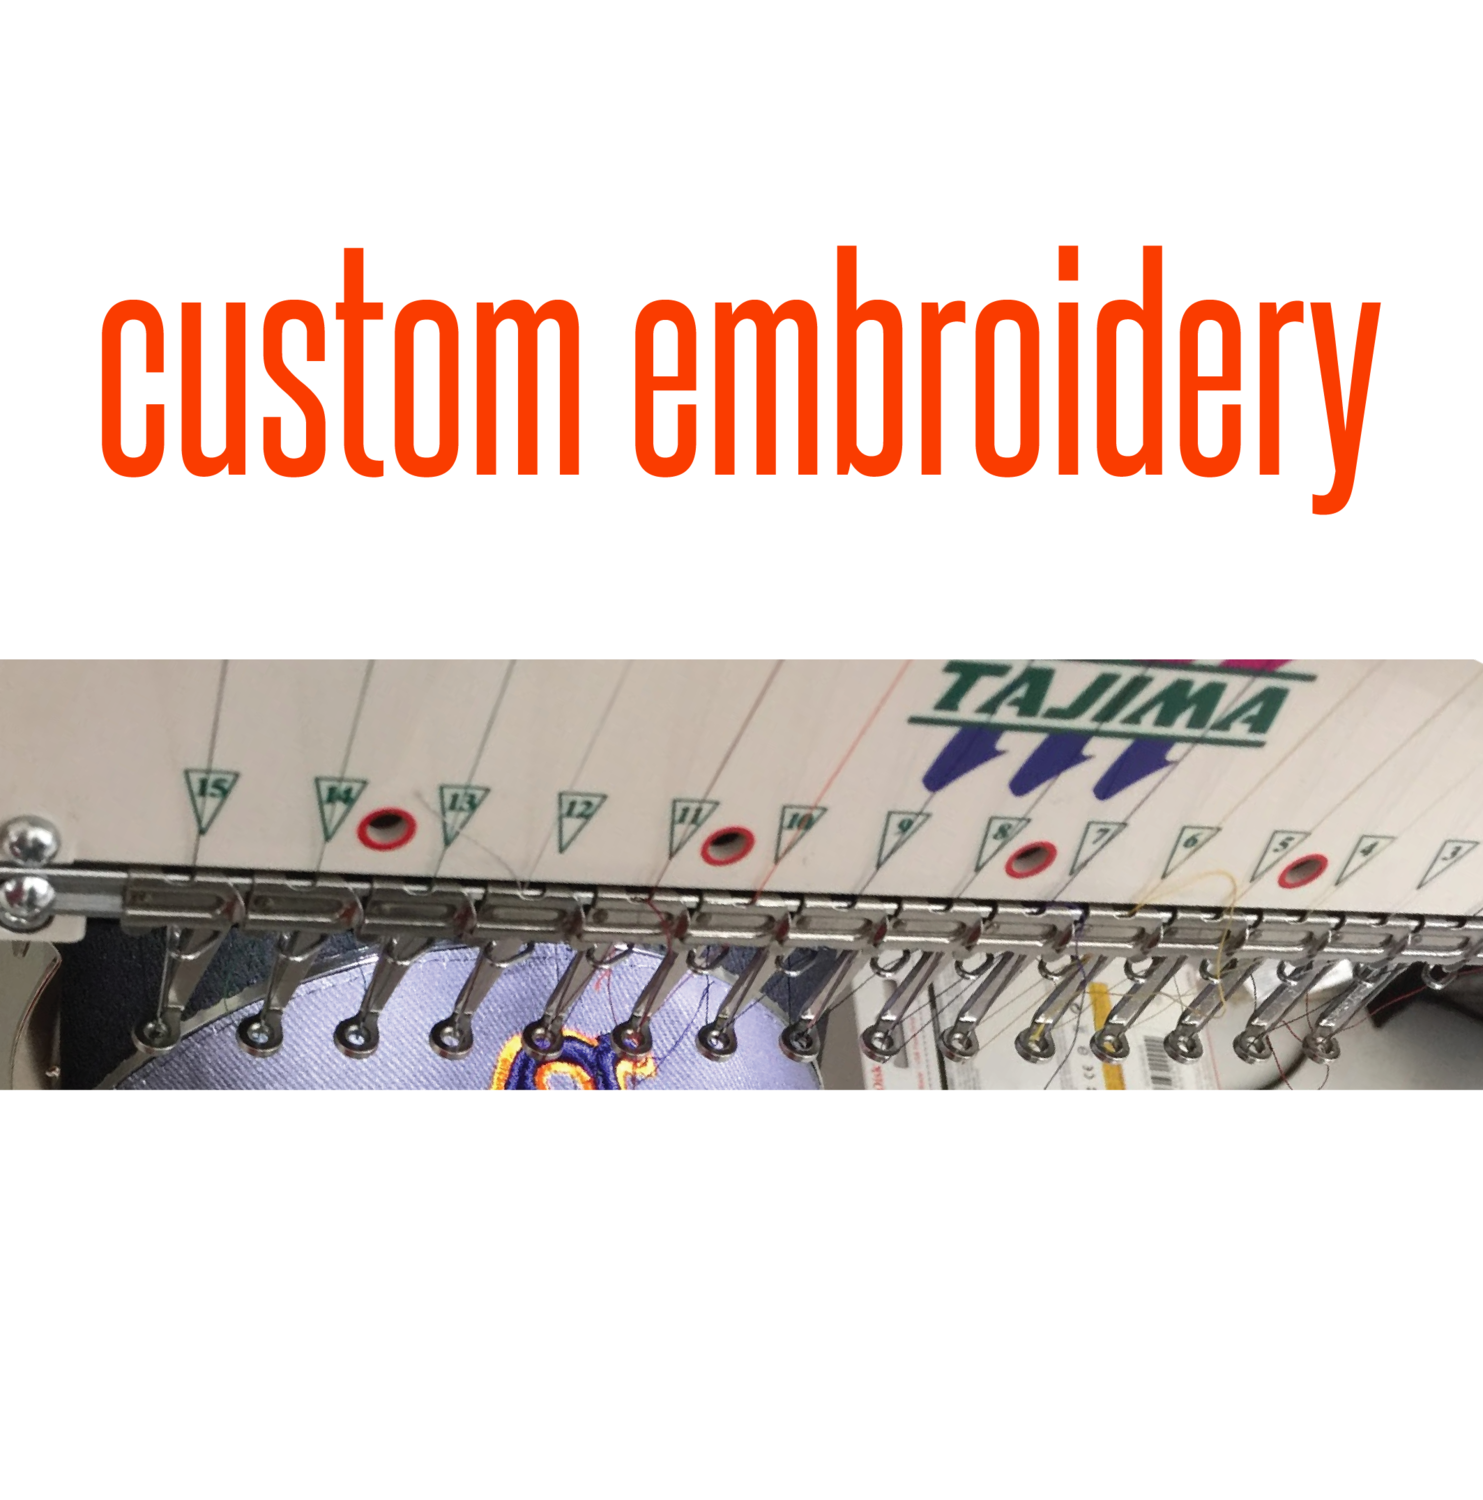 CUSTOM EMBROIDERY - blank apparel separate